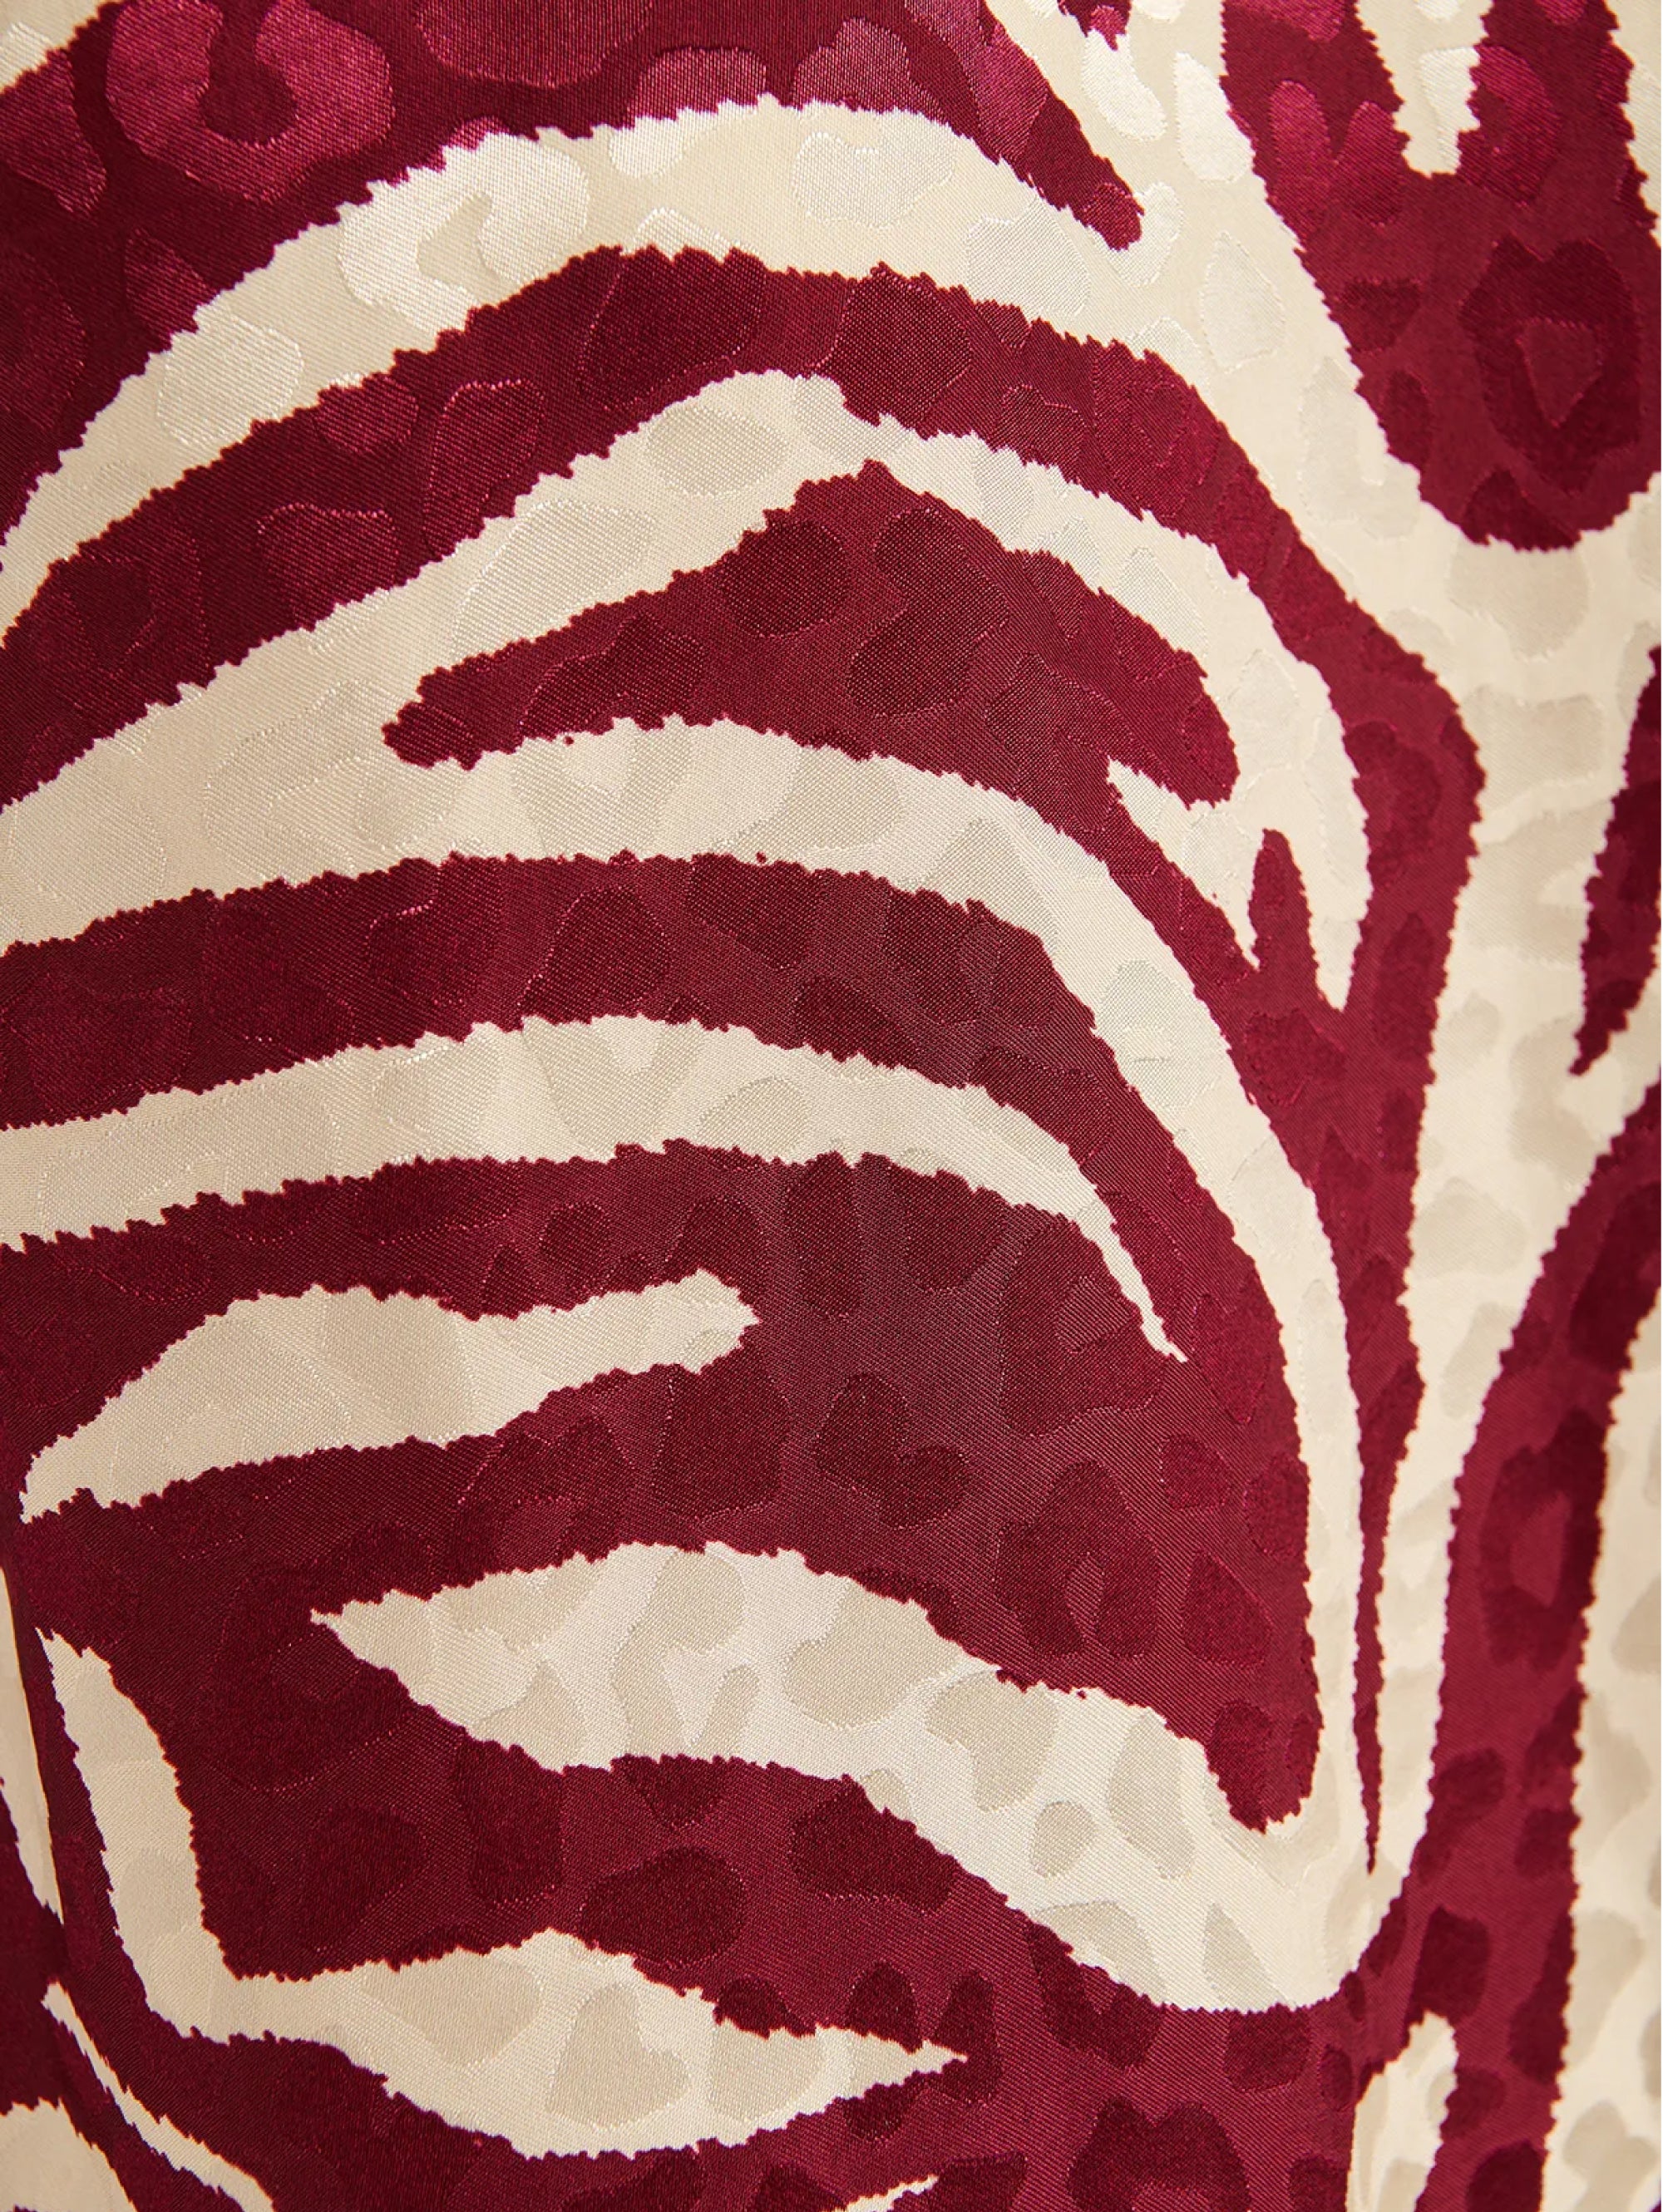 Viscose Top with Red Zebra Print